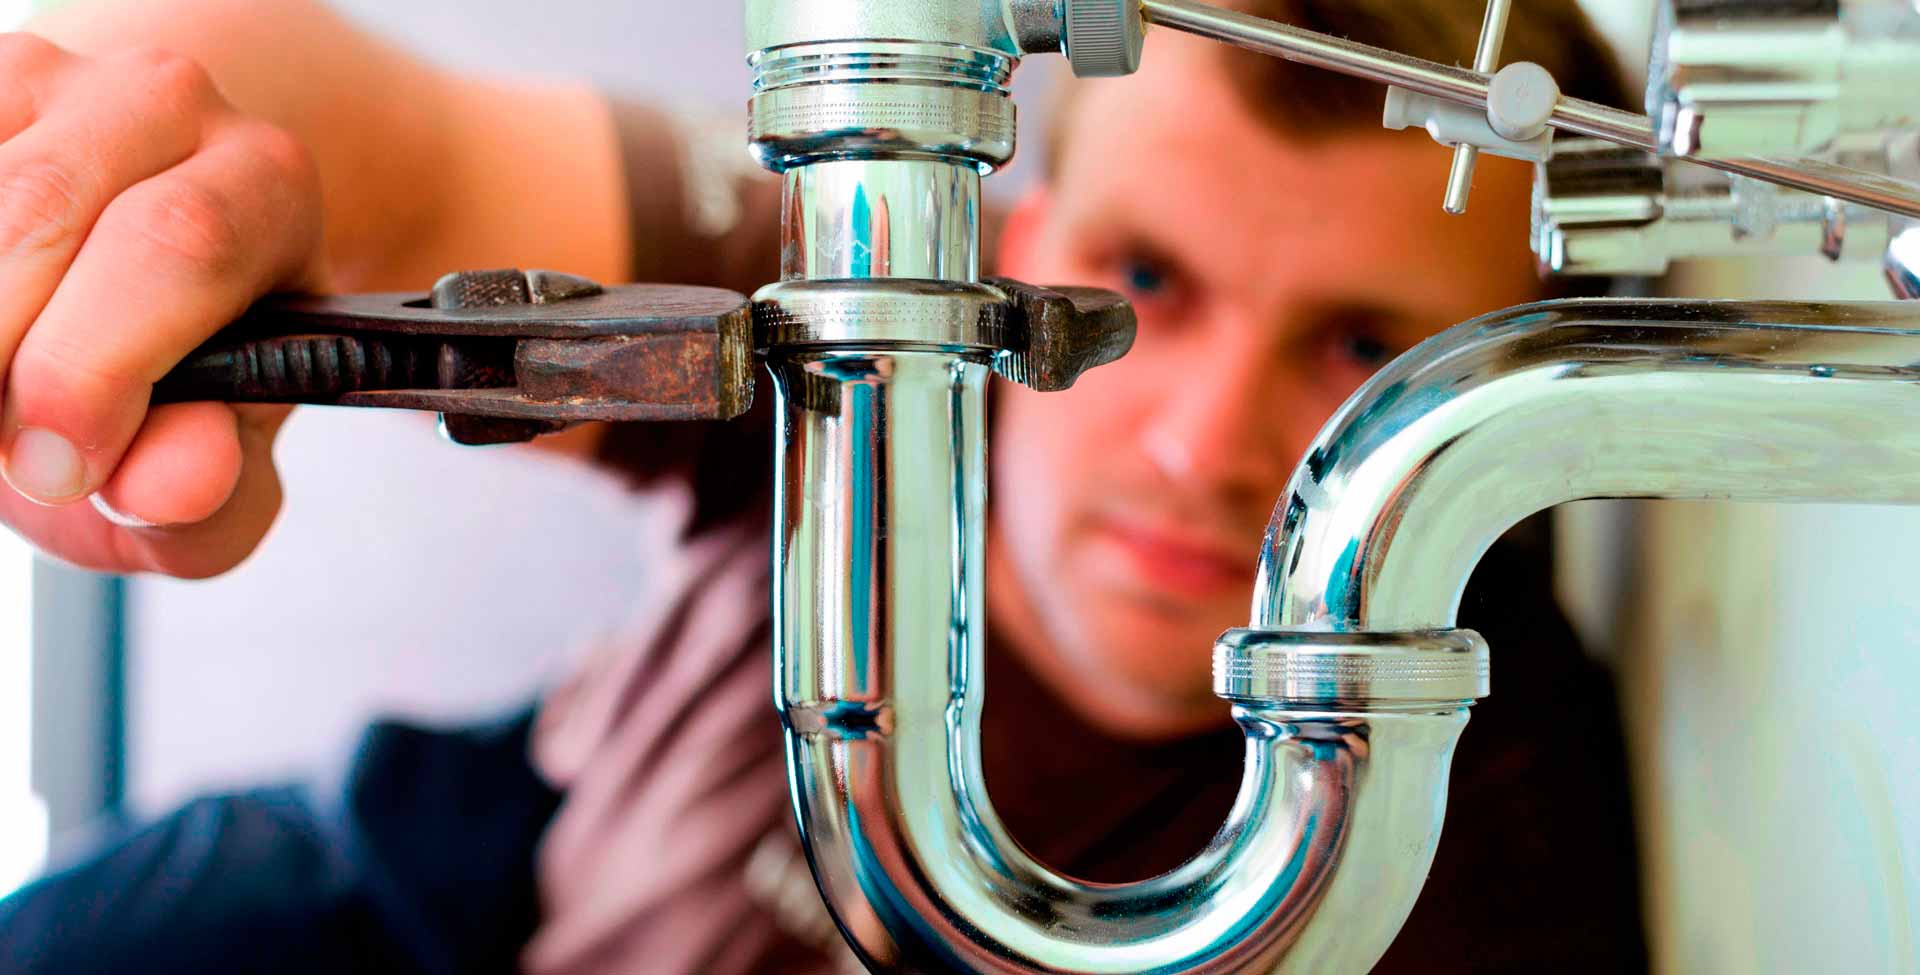 destroy plumbing - مزایا و معایب کولرهای آبی - آرین پادرا صنعت